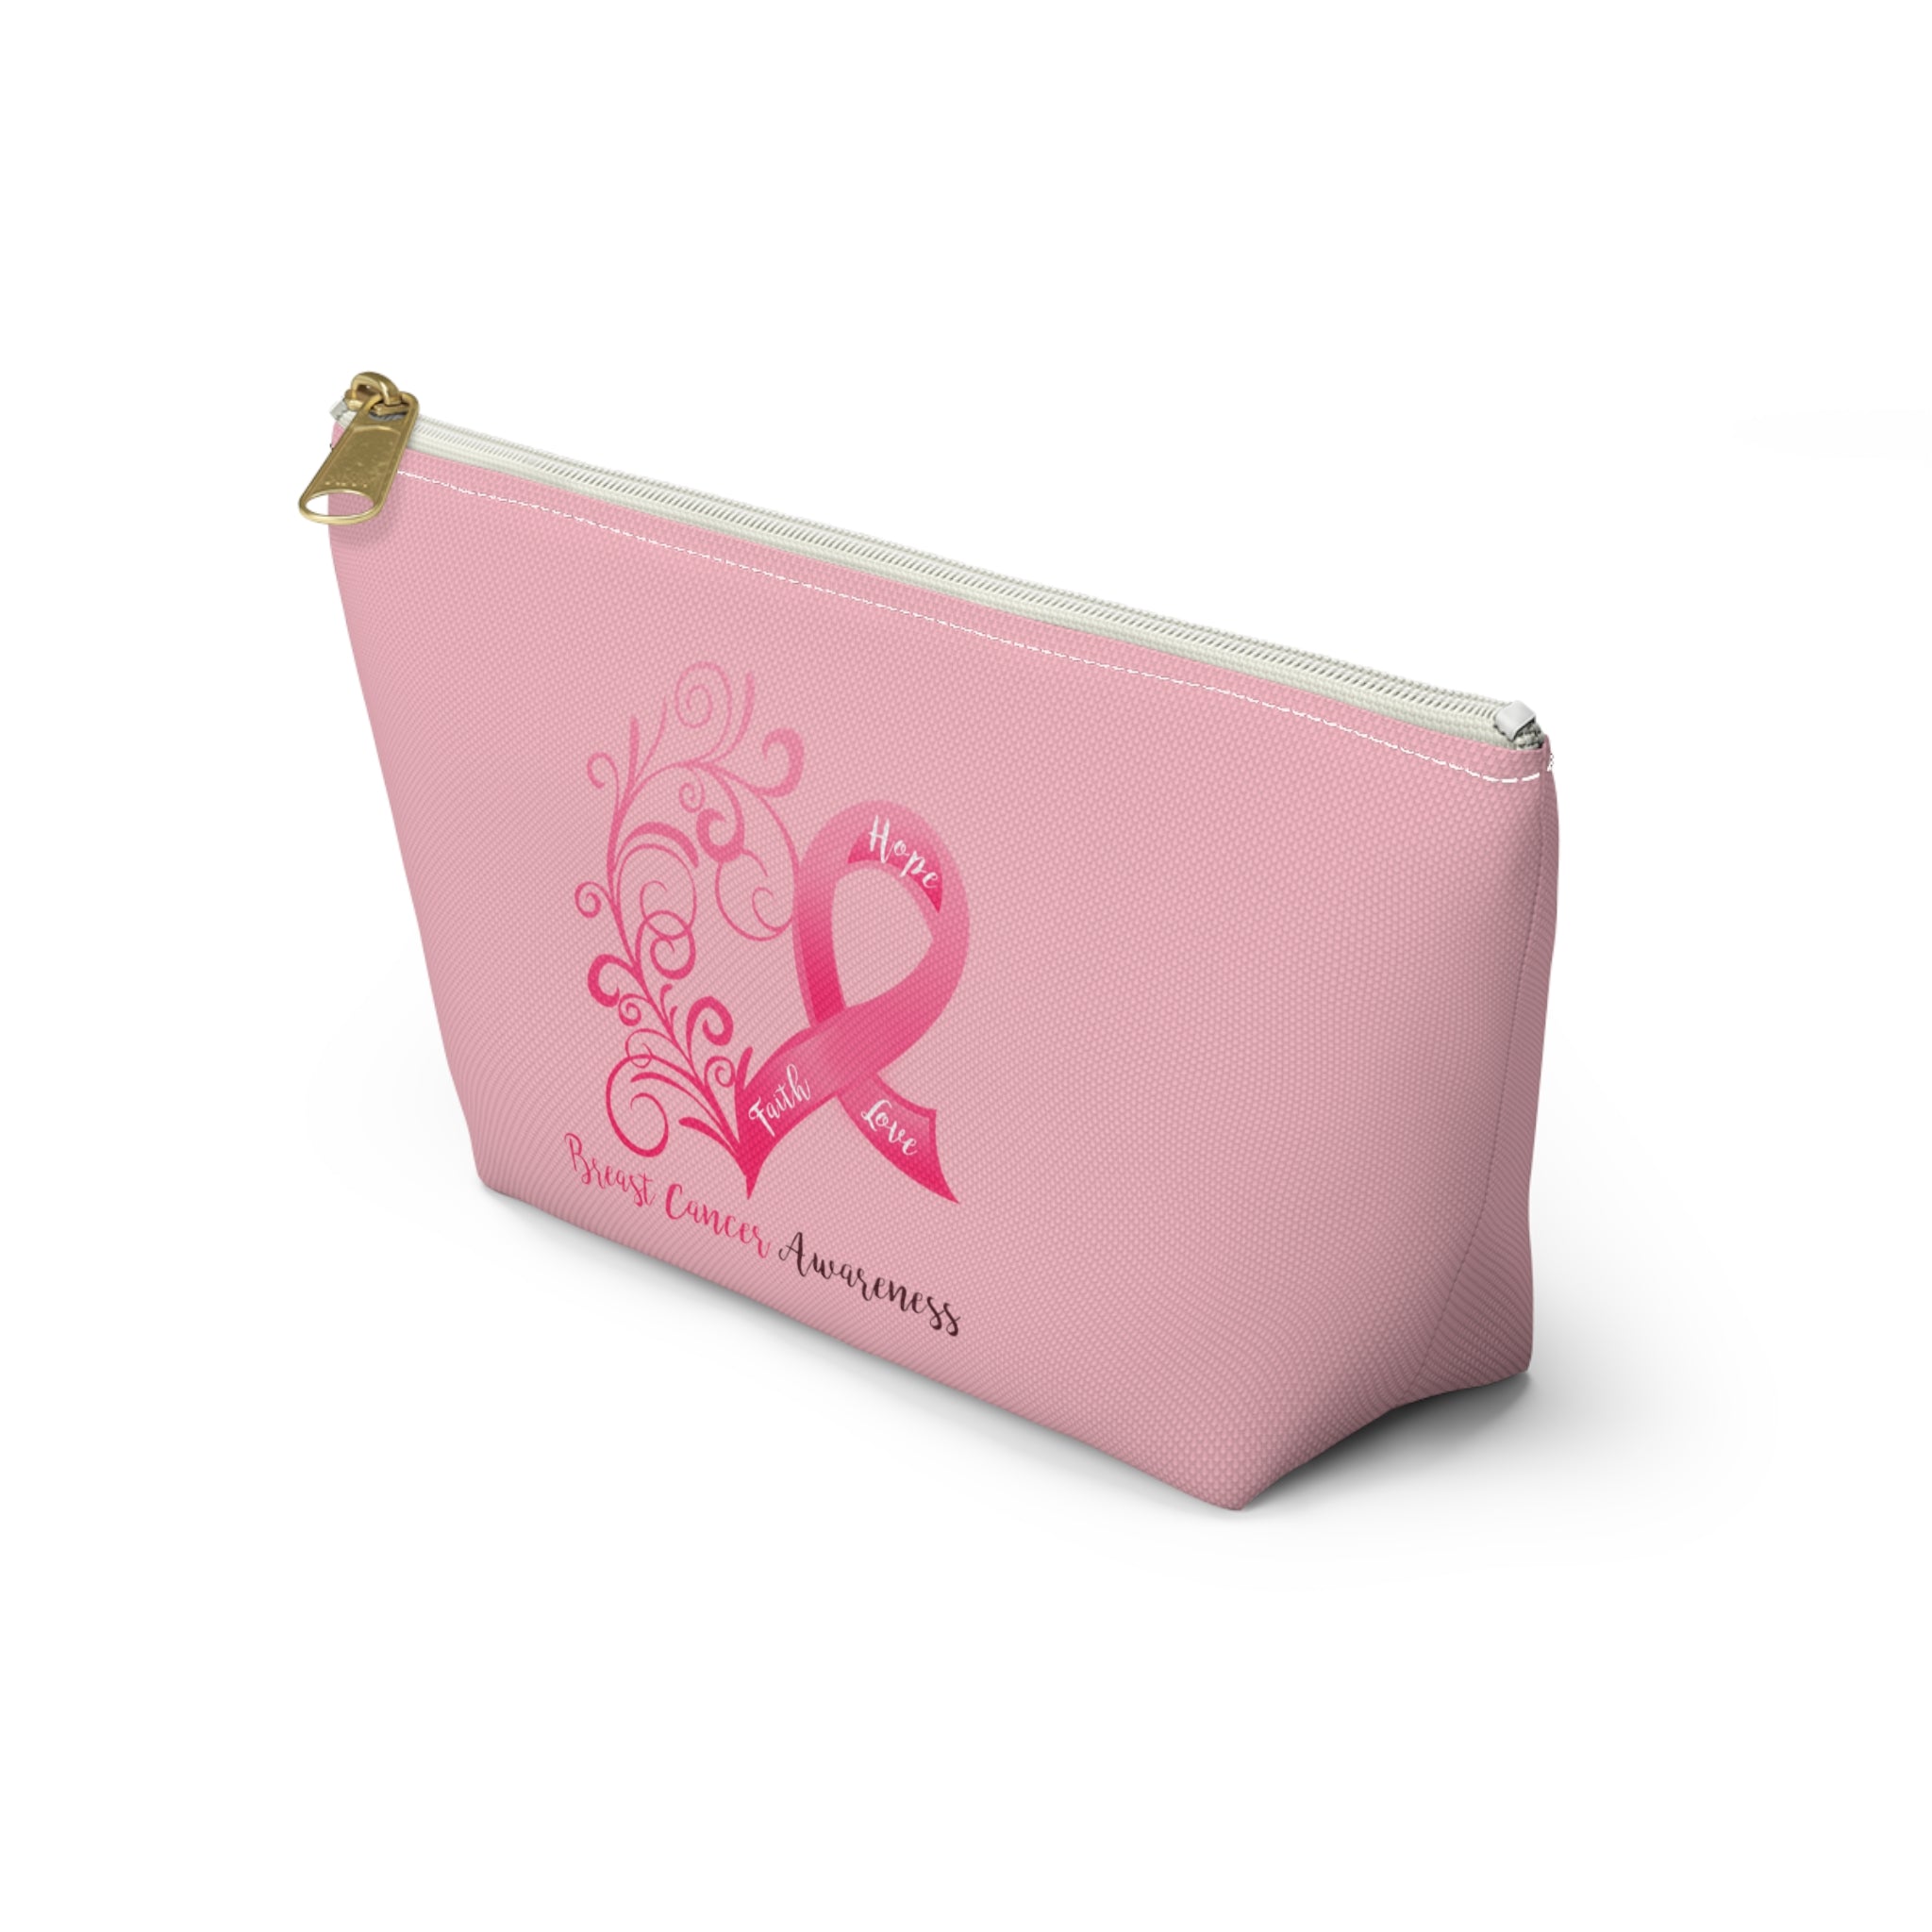 Breast Cancer Awareness Neoprene I.D. Wallet Coin Purse w/ Key Ring | eBay